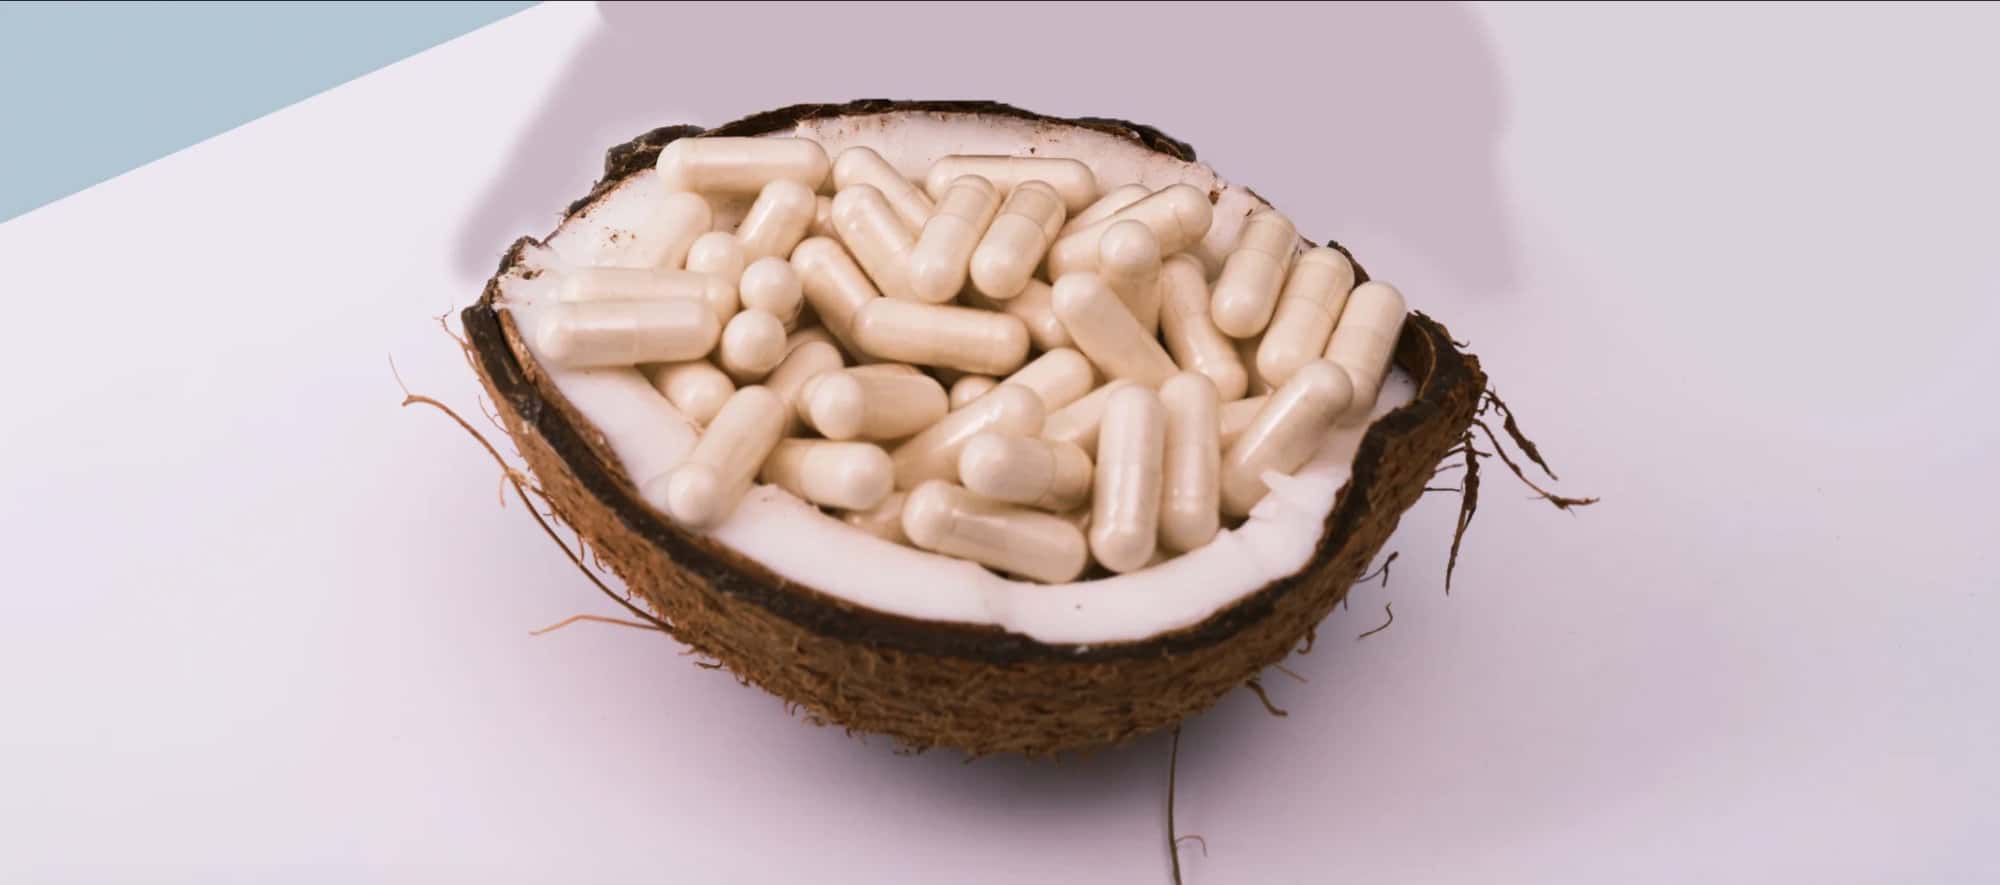 Botanycl Vegan Vitamin D capsules in a coconut